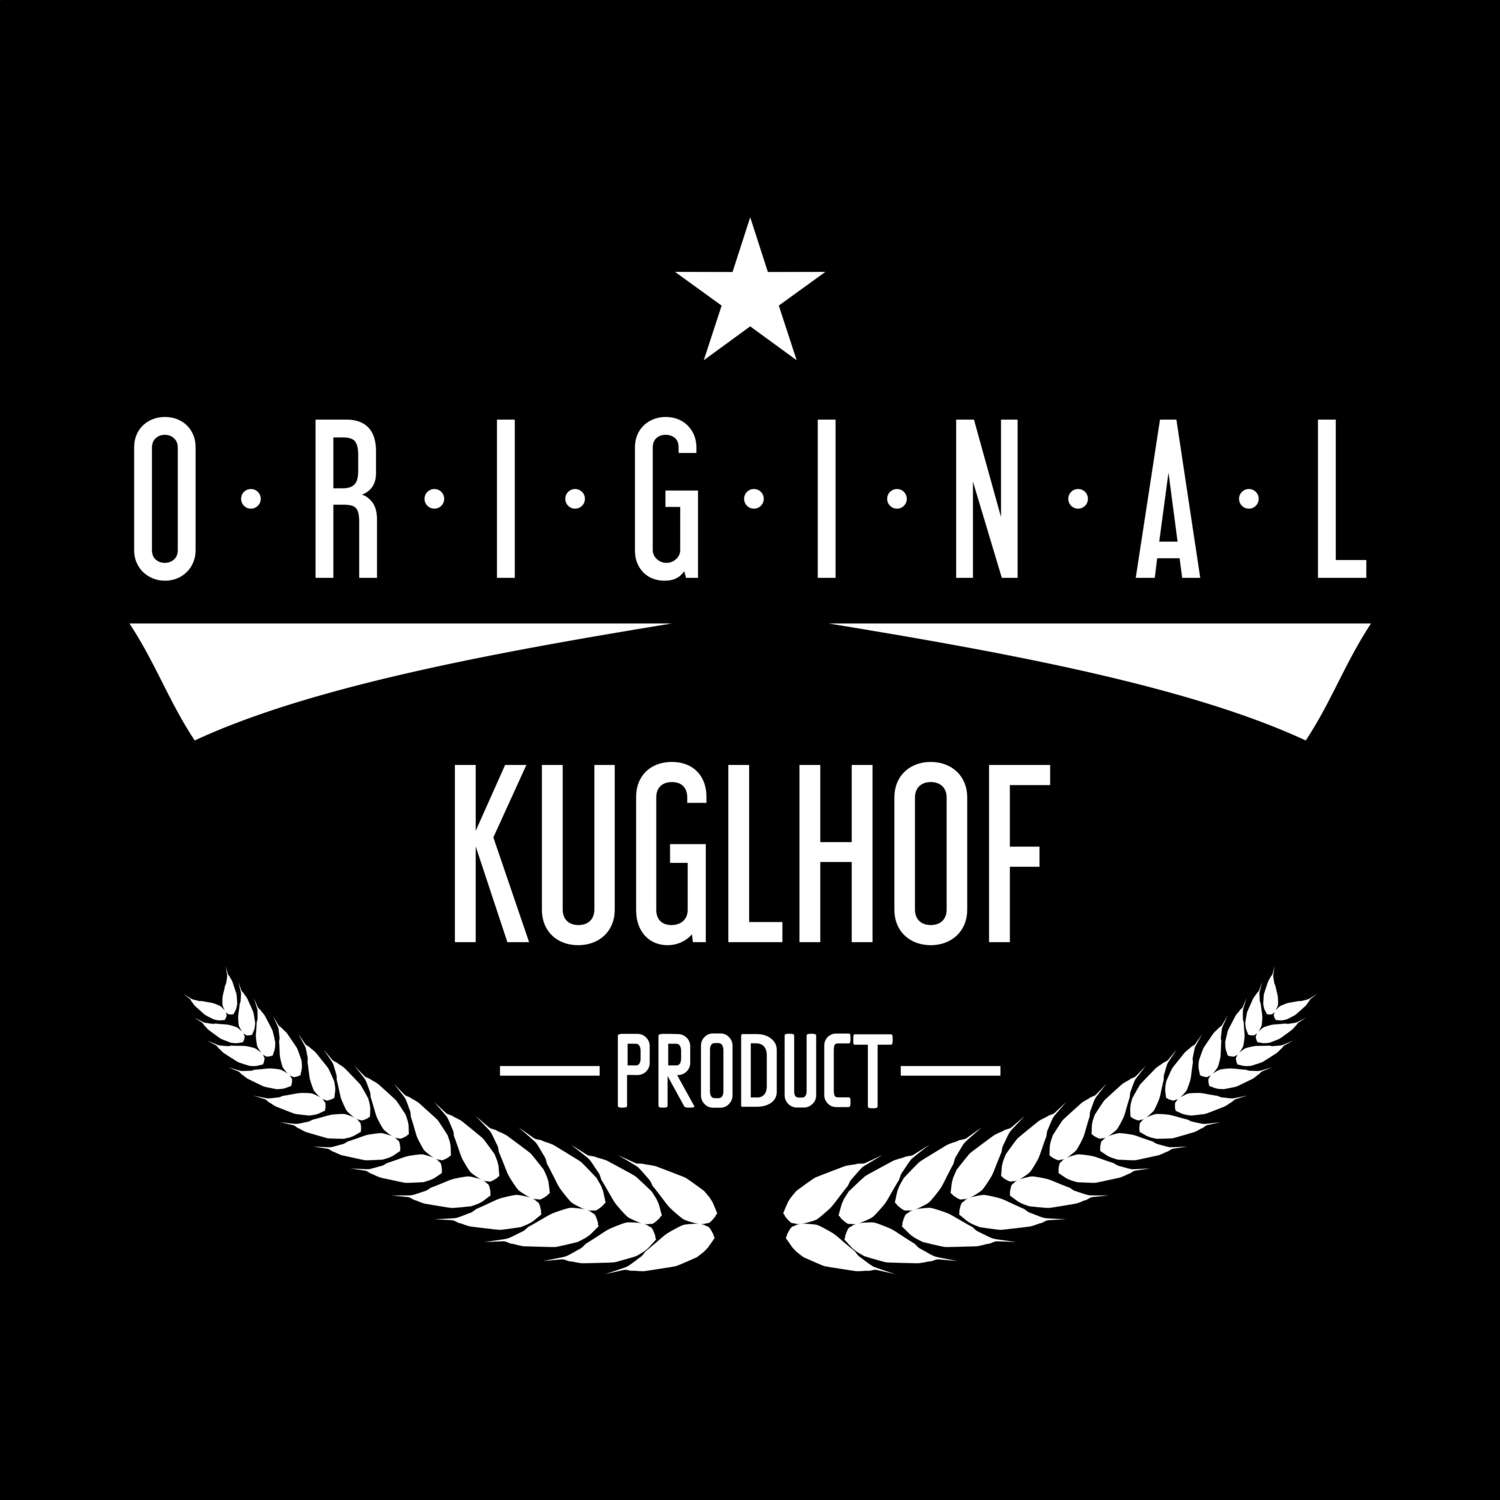 Kuglhof T-Shirt »Original Product«